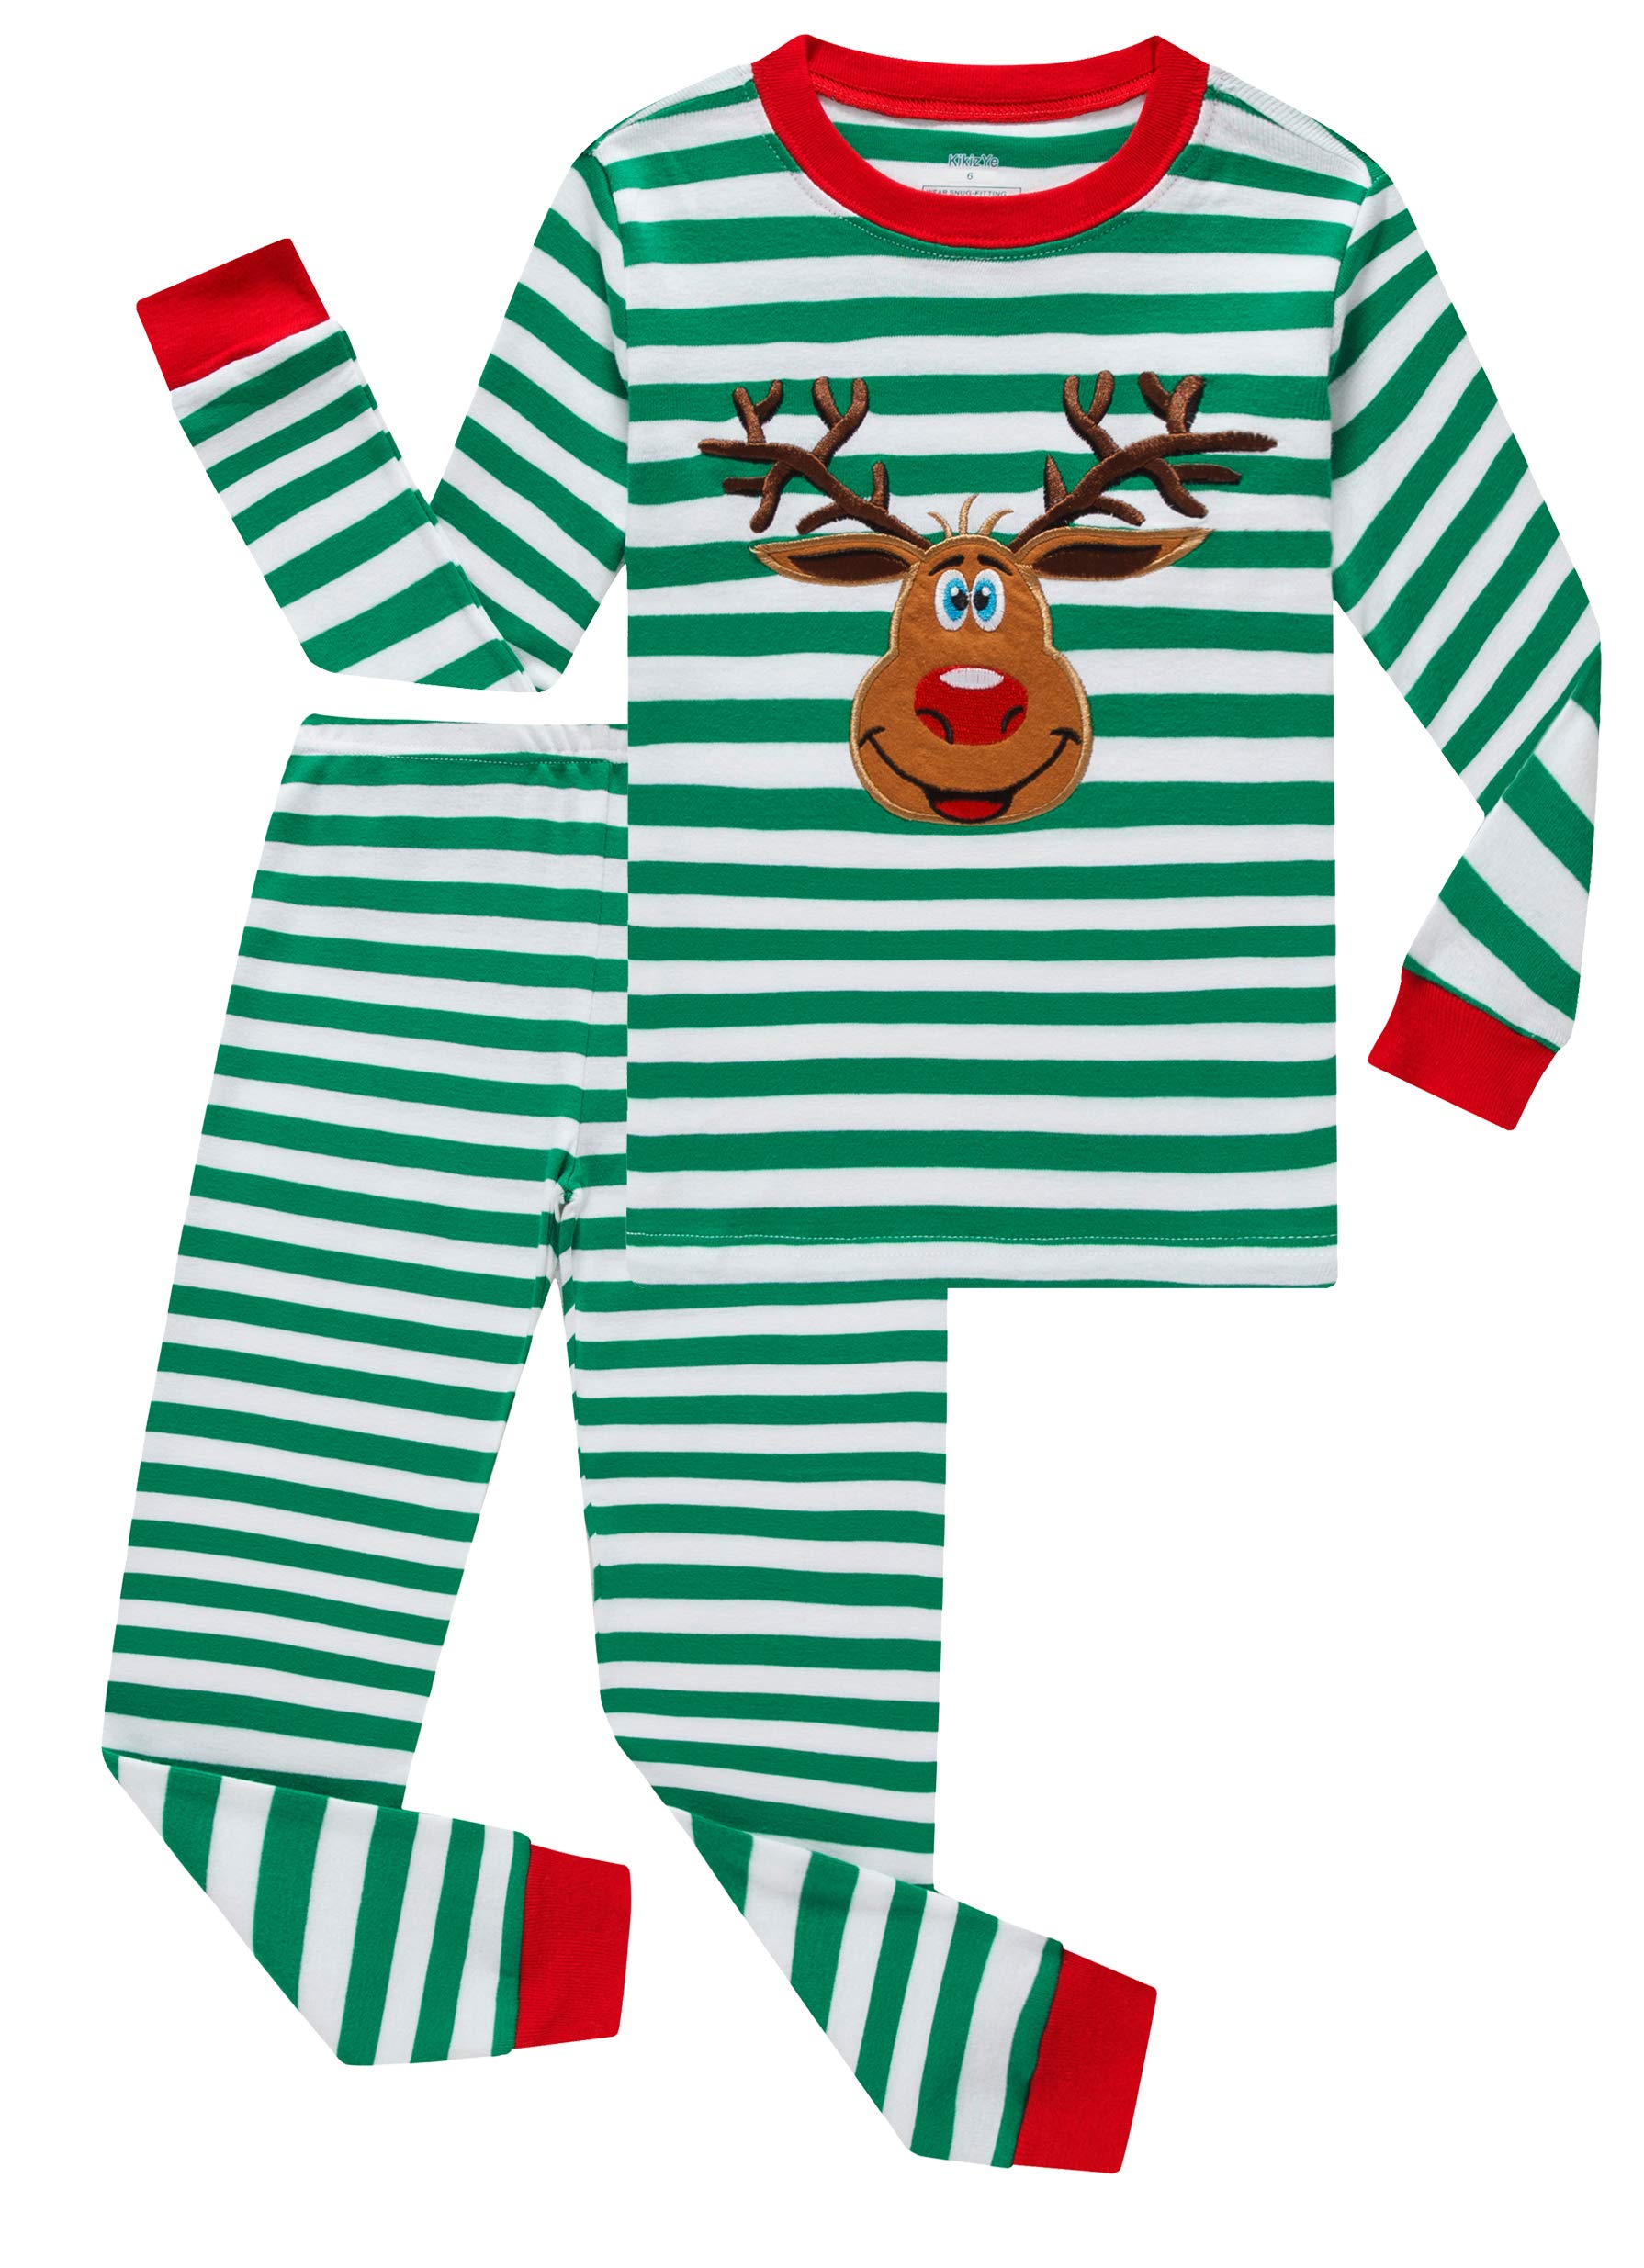 Kikizye Christmas Baby Boys Pjs 100 Cotton Long Sleeve Kids Infant Reindeer Xmas Pajamas Sets Size 18-24Months Green